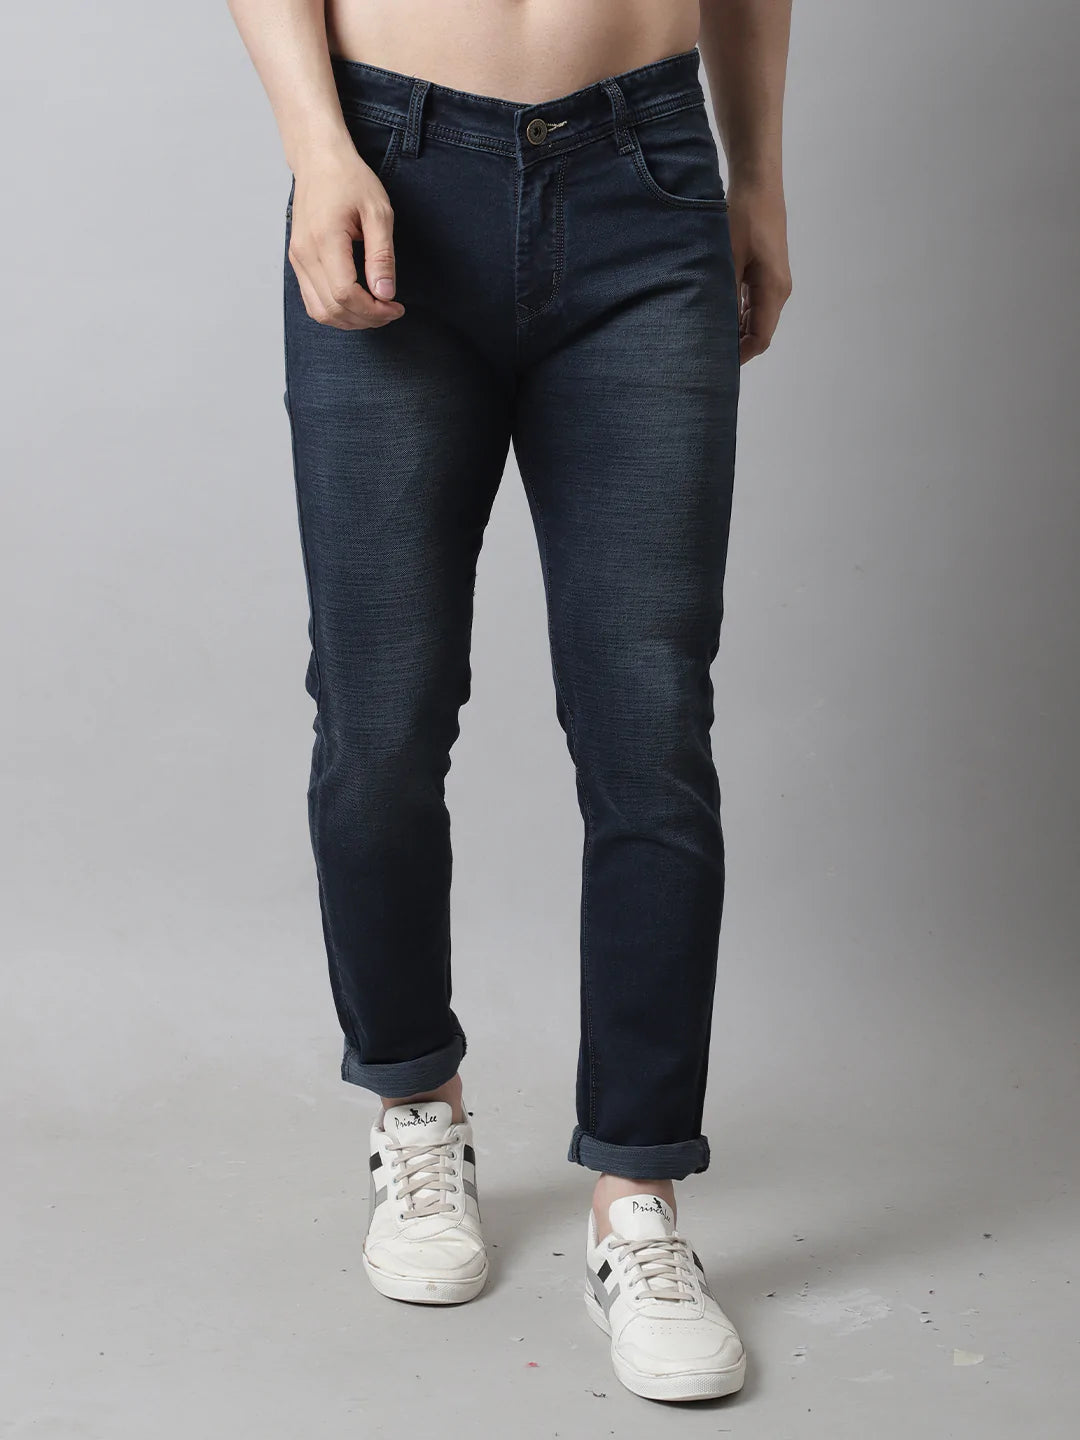 New mens jeans pants Business Jeans Men Classic Style Dark Blue Stretch Denim  Jeans Pants for Male